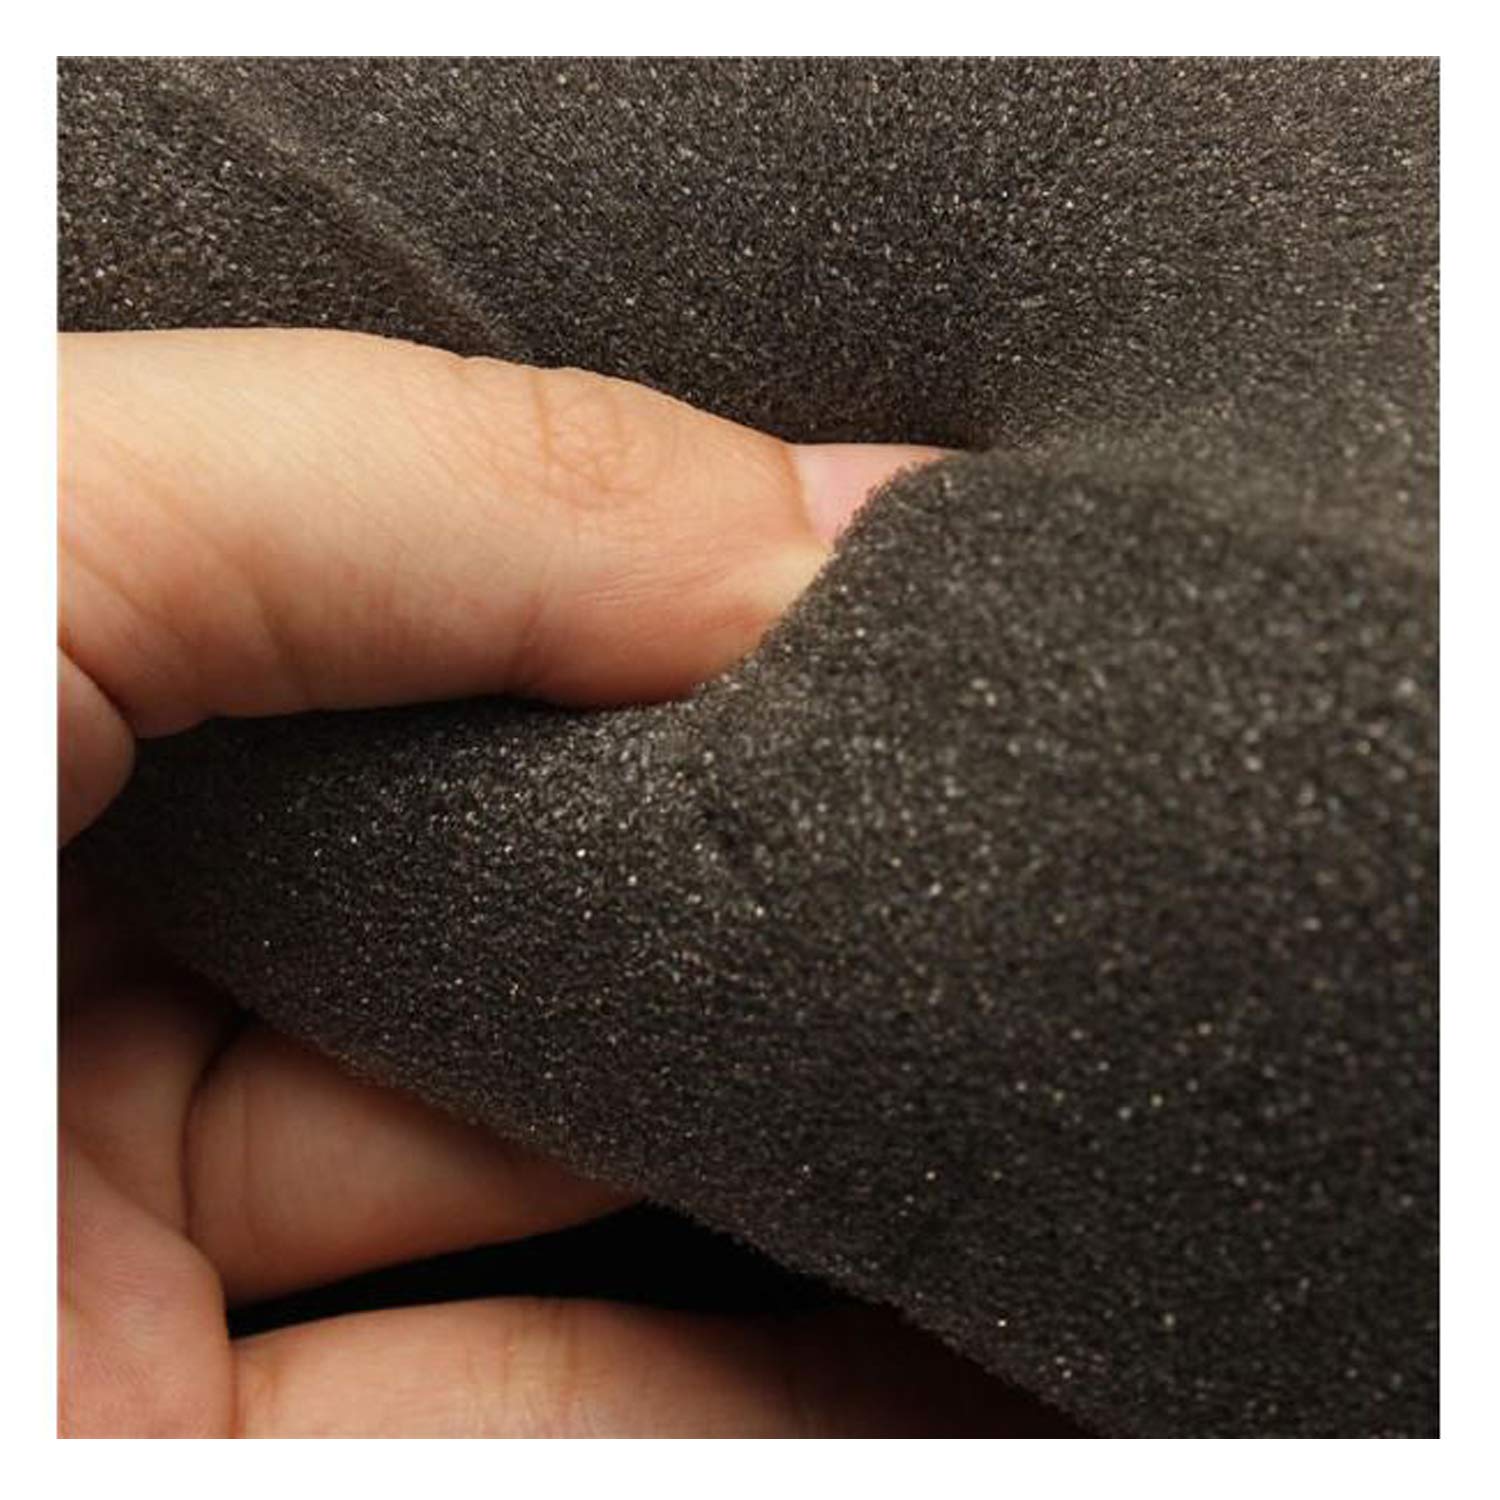 AKTRADING CO. CertiPUR-US Certified Charcoal Rubber Foam Sheet Cushion (Seat Replacement, Upholstery Sheet, Foam Padding, Acoustic Foam Sheet) - 1